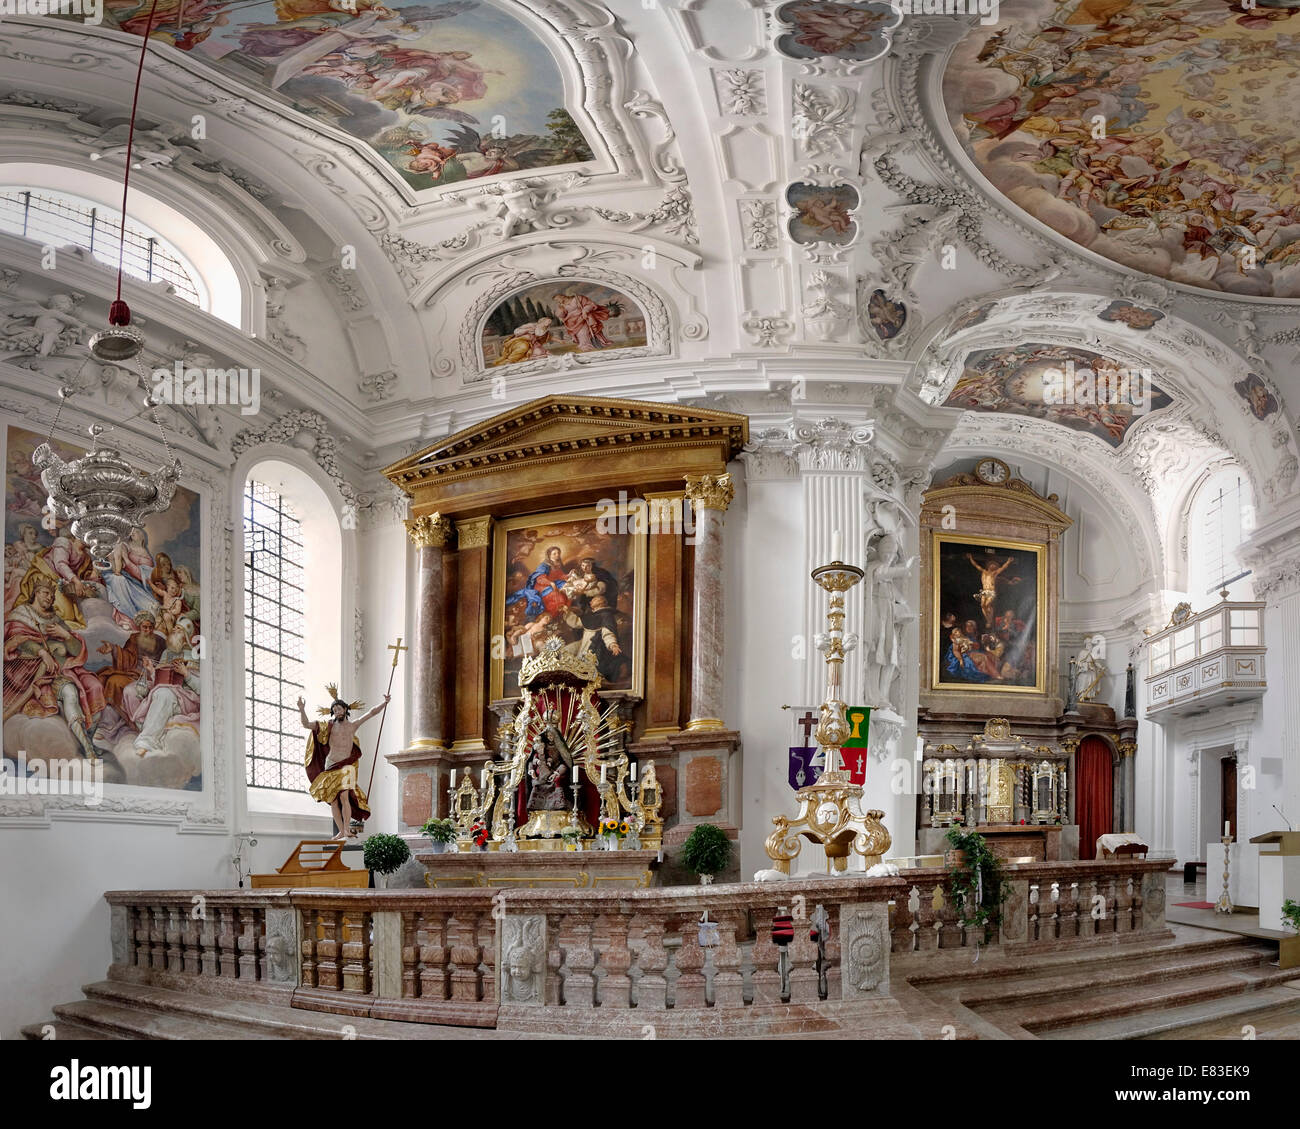 DE - BAVARIA: Interior of the Pfarrkirche St. Quirinus in Tegernsee (Previously a Benedictine Monastery) Stock Photo